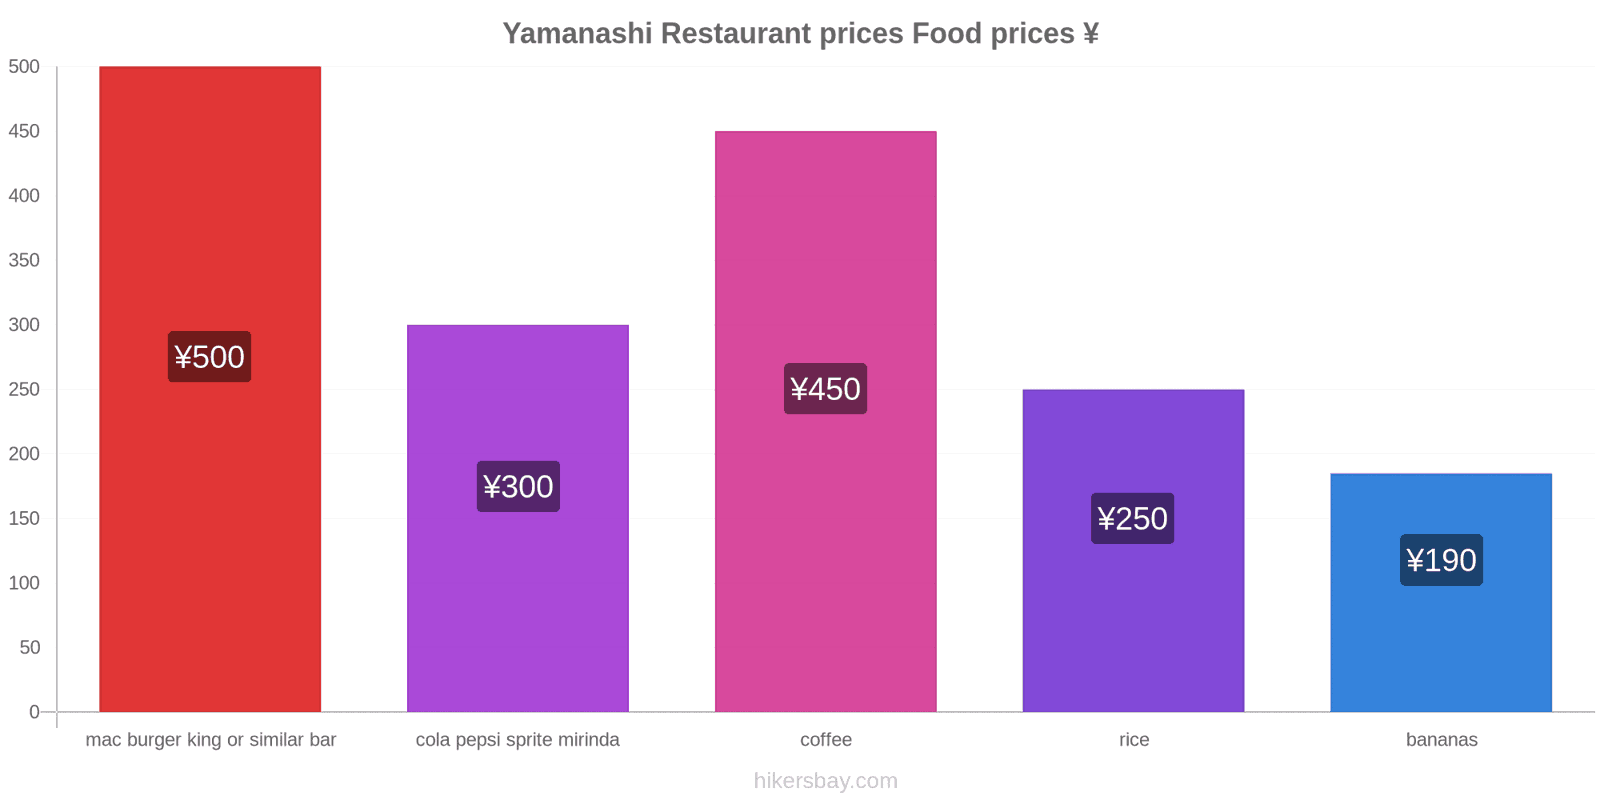 Yamanashi price changes hikersbay.com